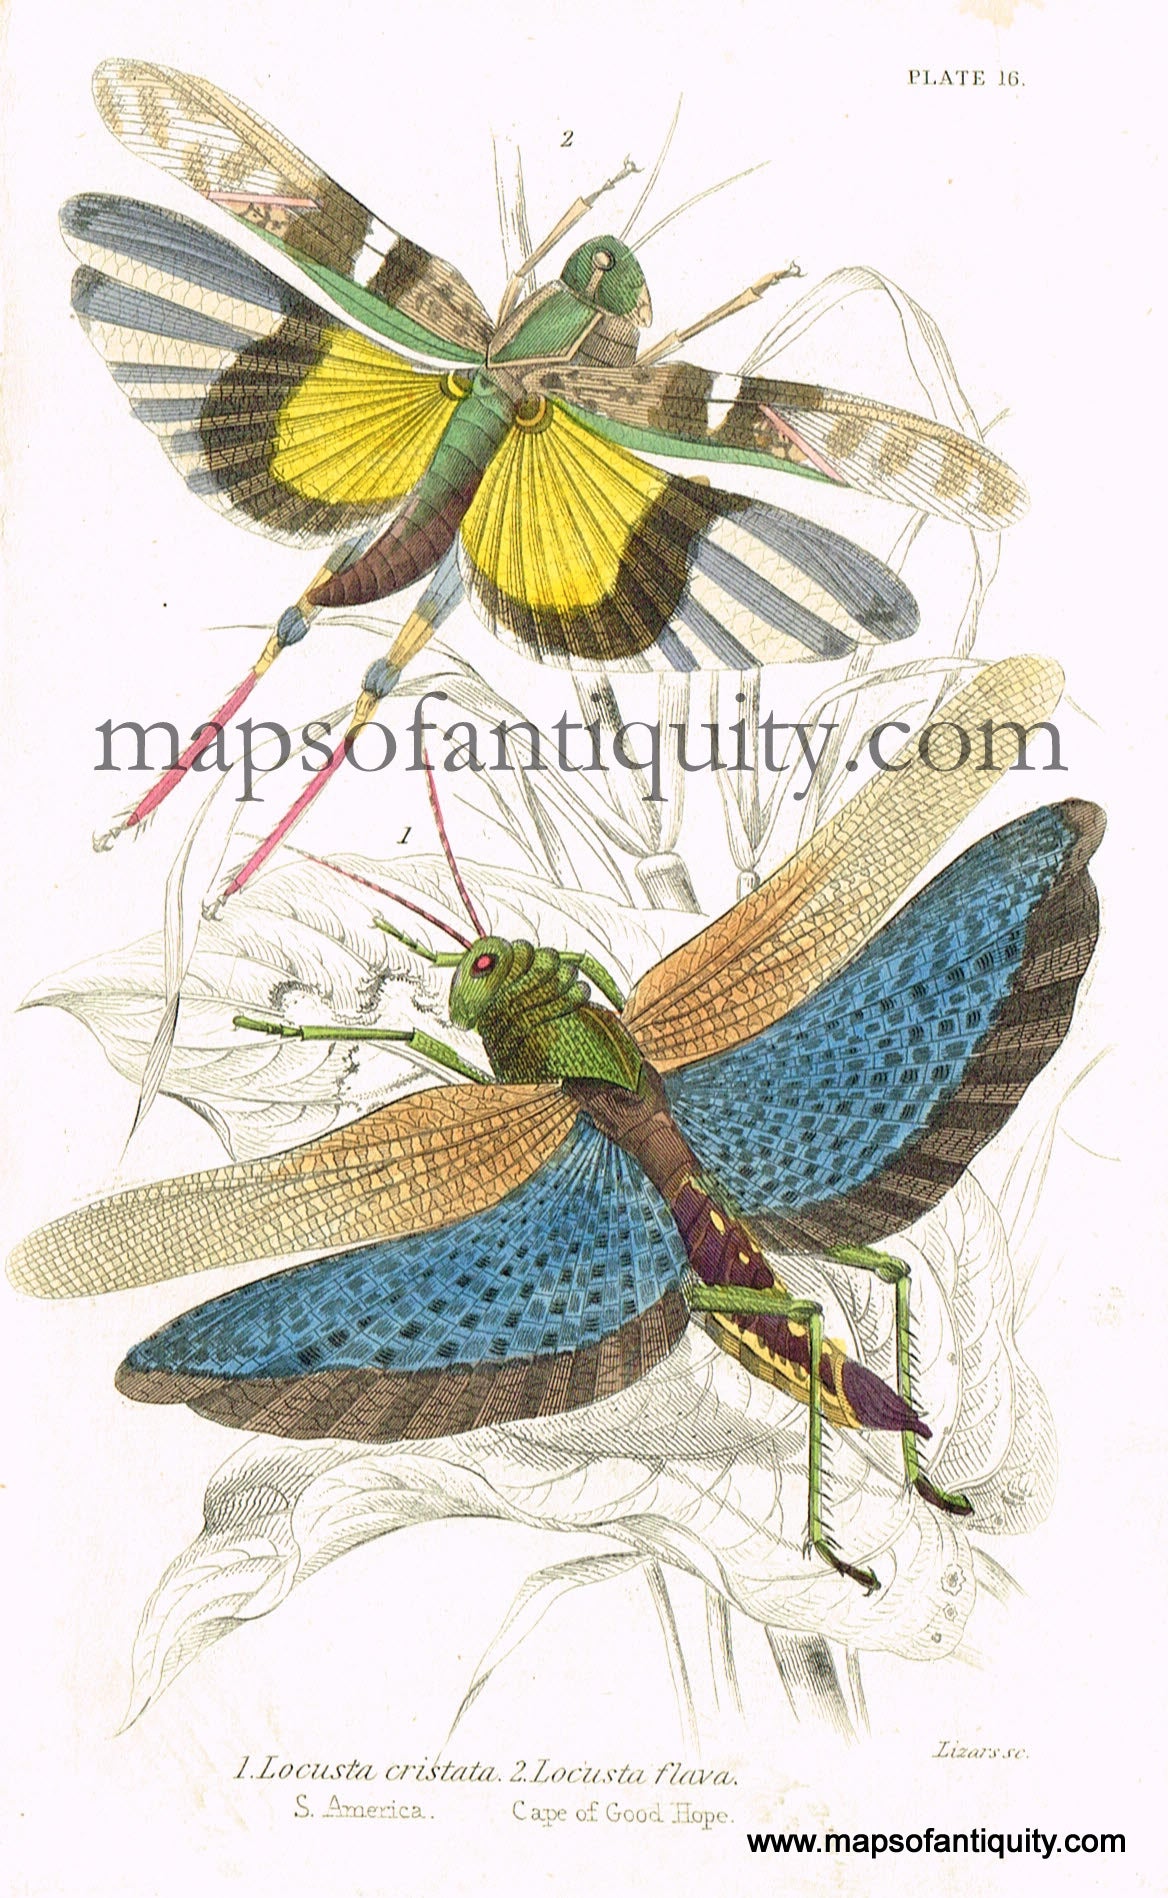 Antique-Hand-Colored-Print-Locusta-cristata-&-Locusta-flava-Antique-Prints-Natural-History-Insects-1840-Duncan-Maps-Of-Antiquity